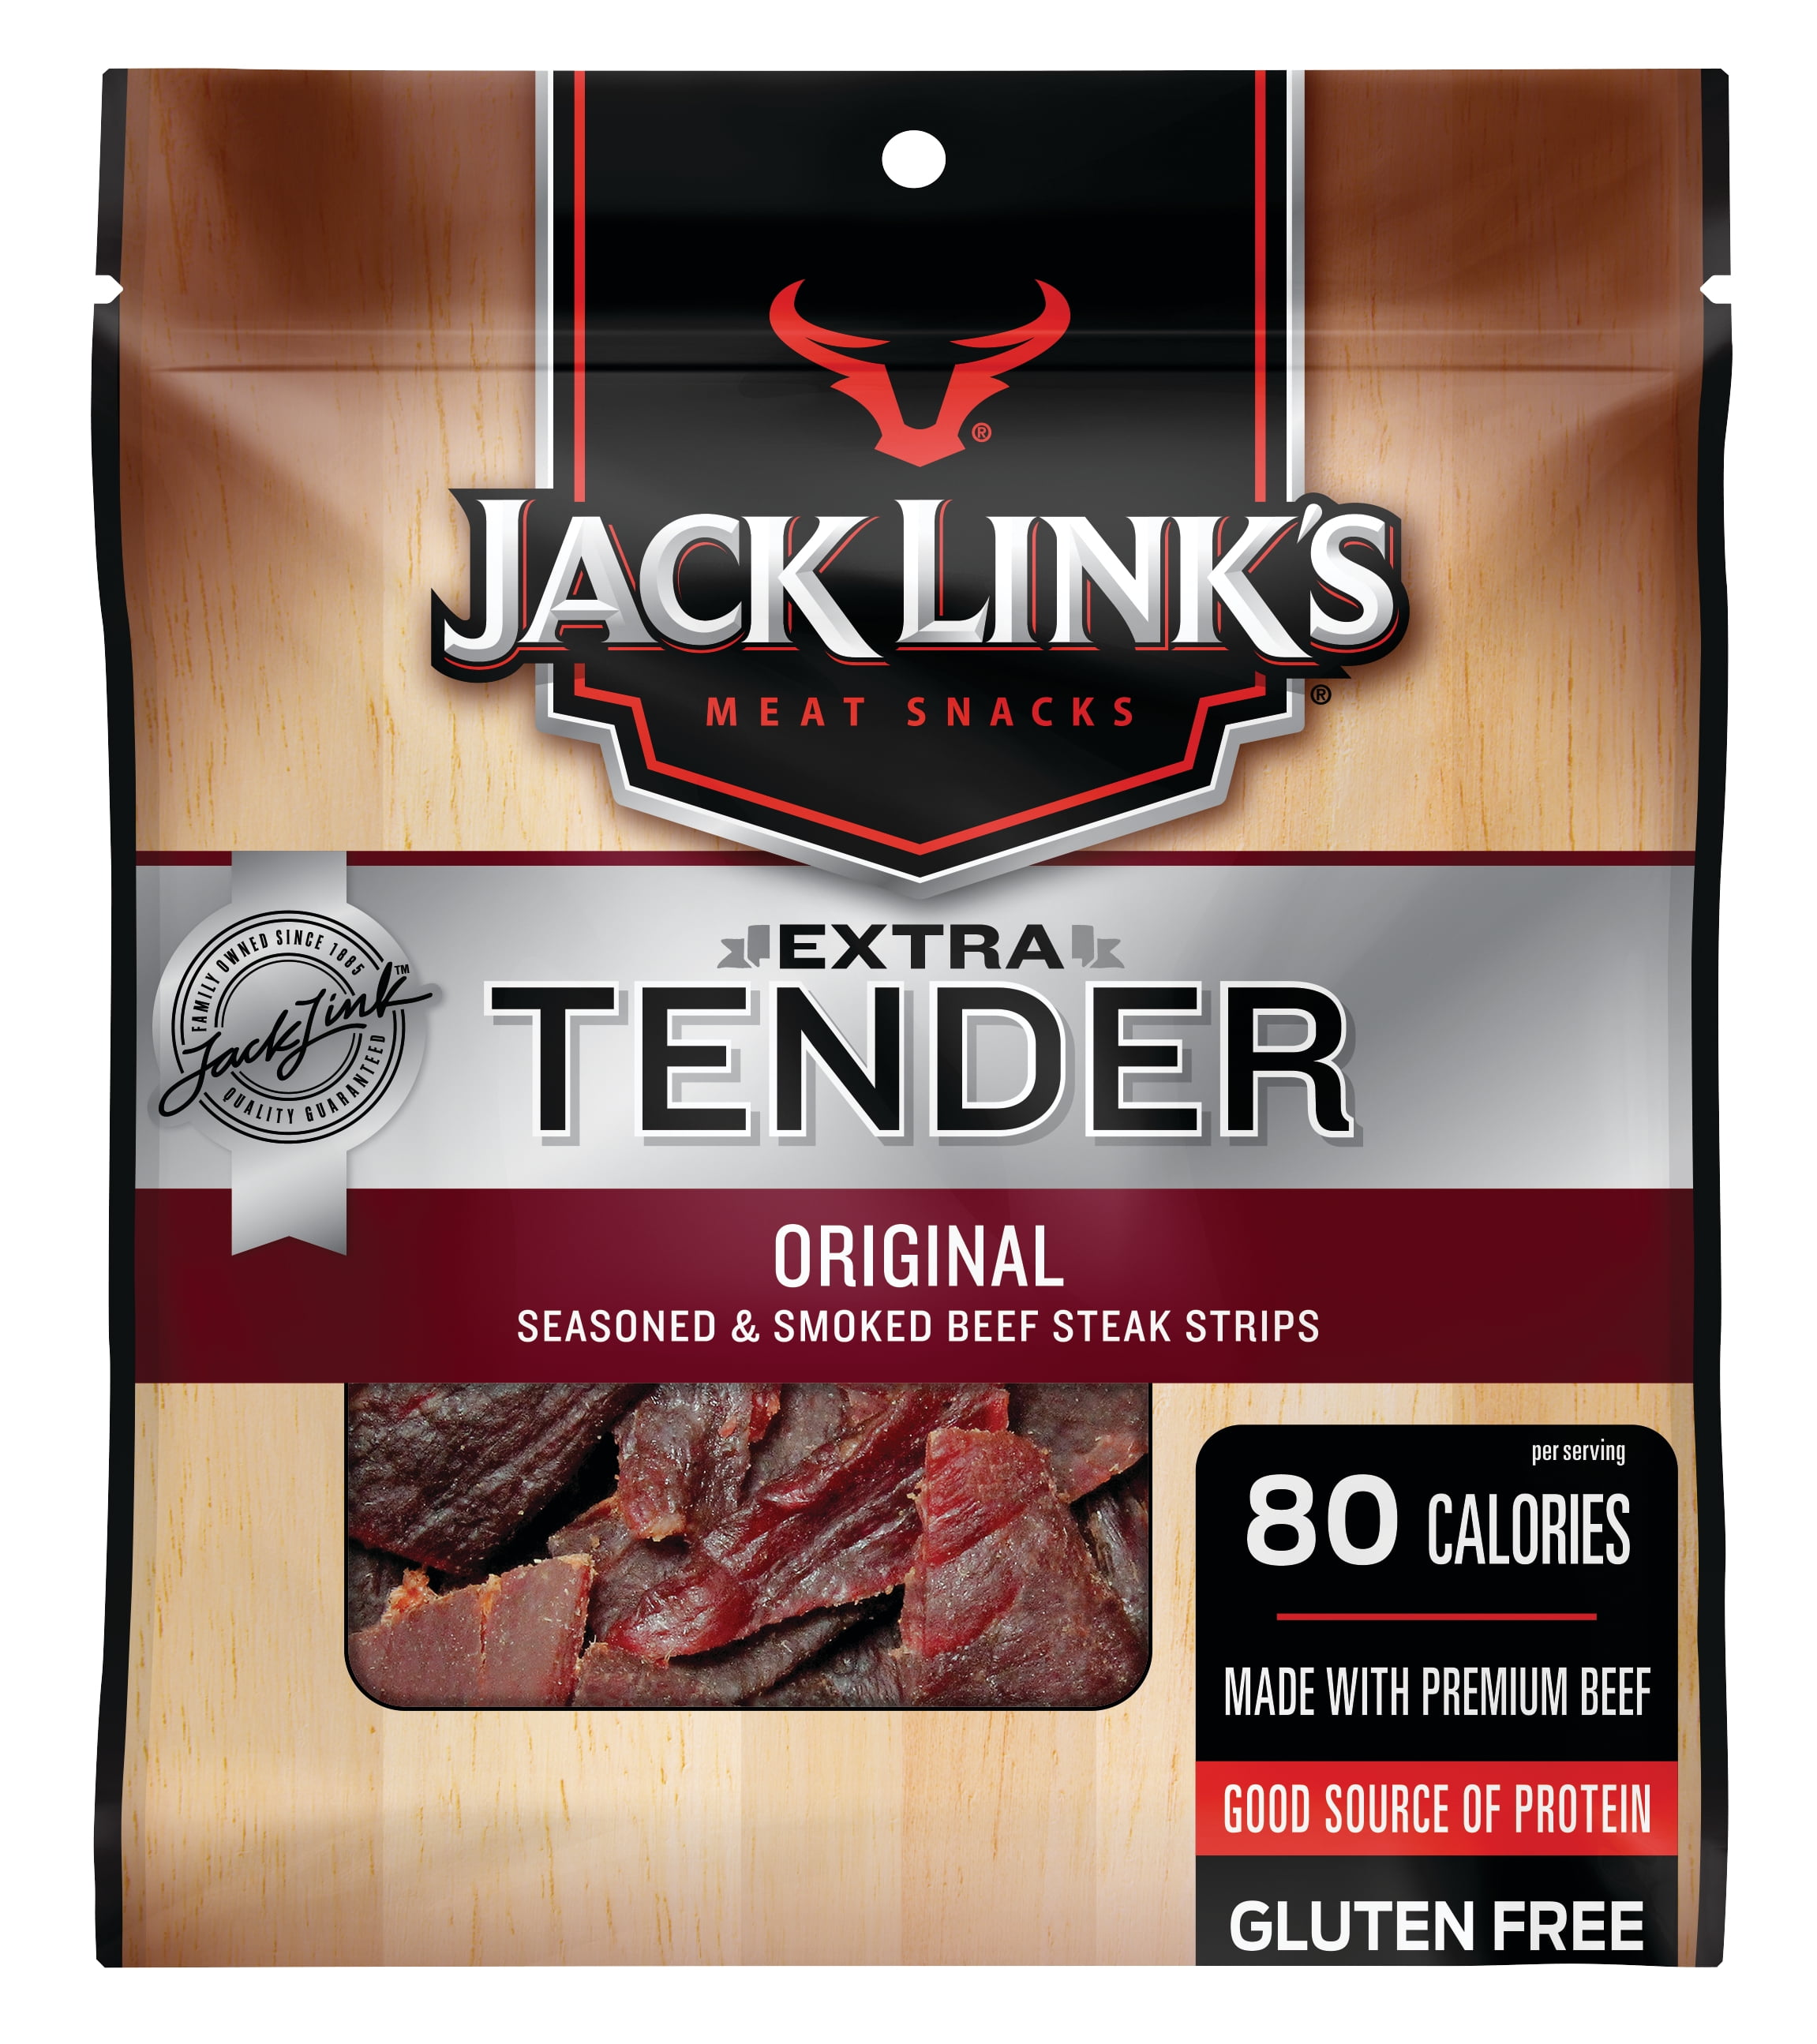 Picture of Jack Links 9475583 2.85 oz Jacks Links Extra Tender Orginal Beef Jerky Peggable Bag - pack of 8